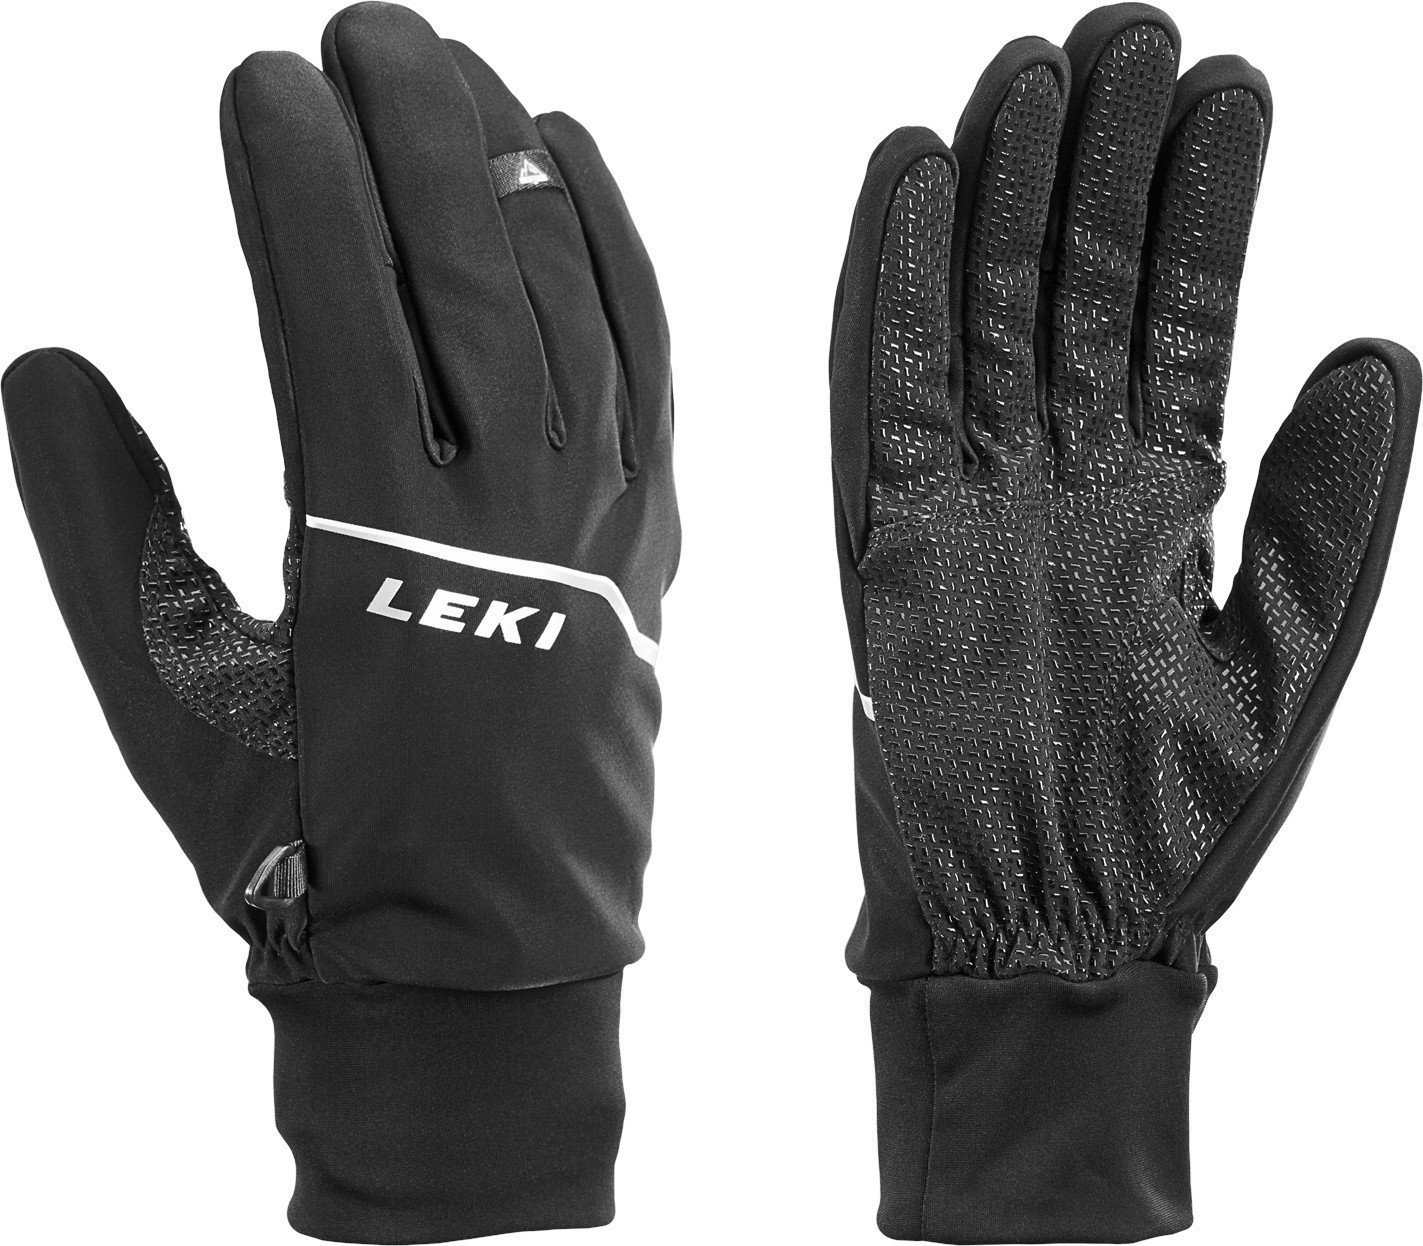 Gloves Leki Tour Lite Black/Chrome/White 8,5 Gloves